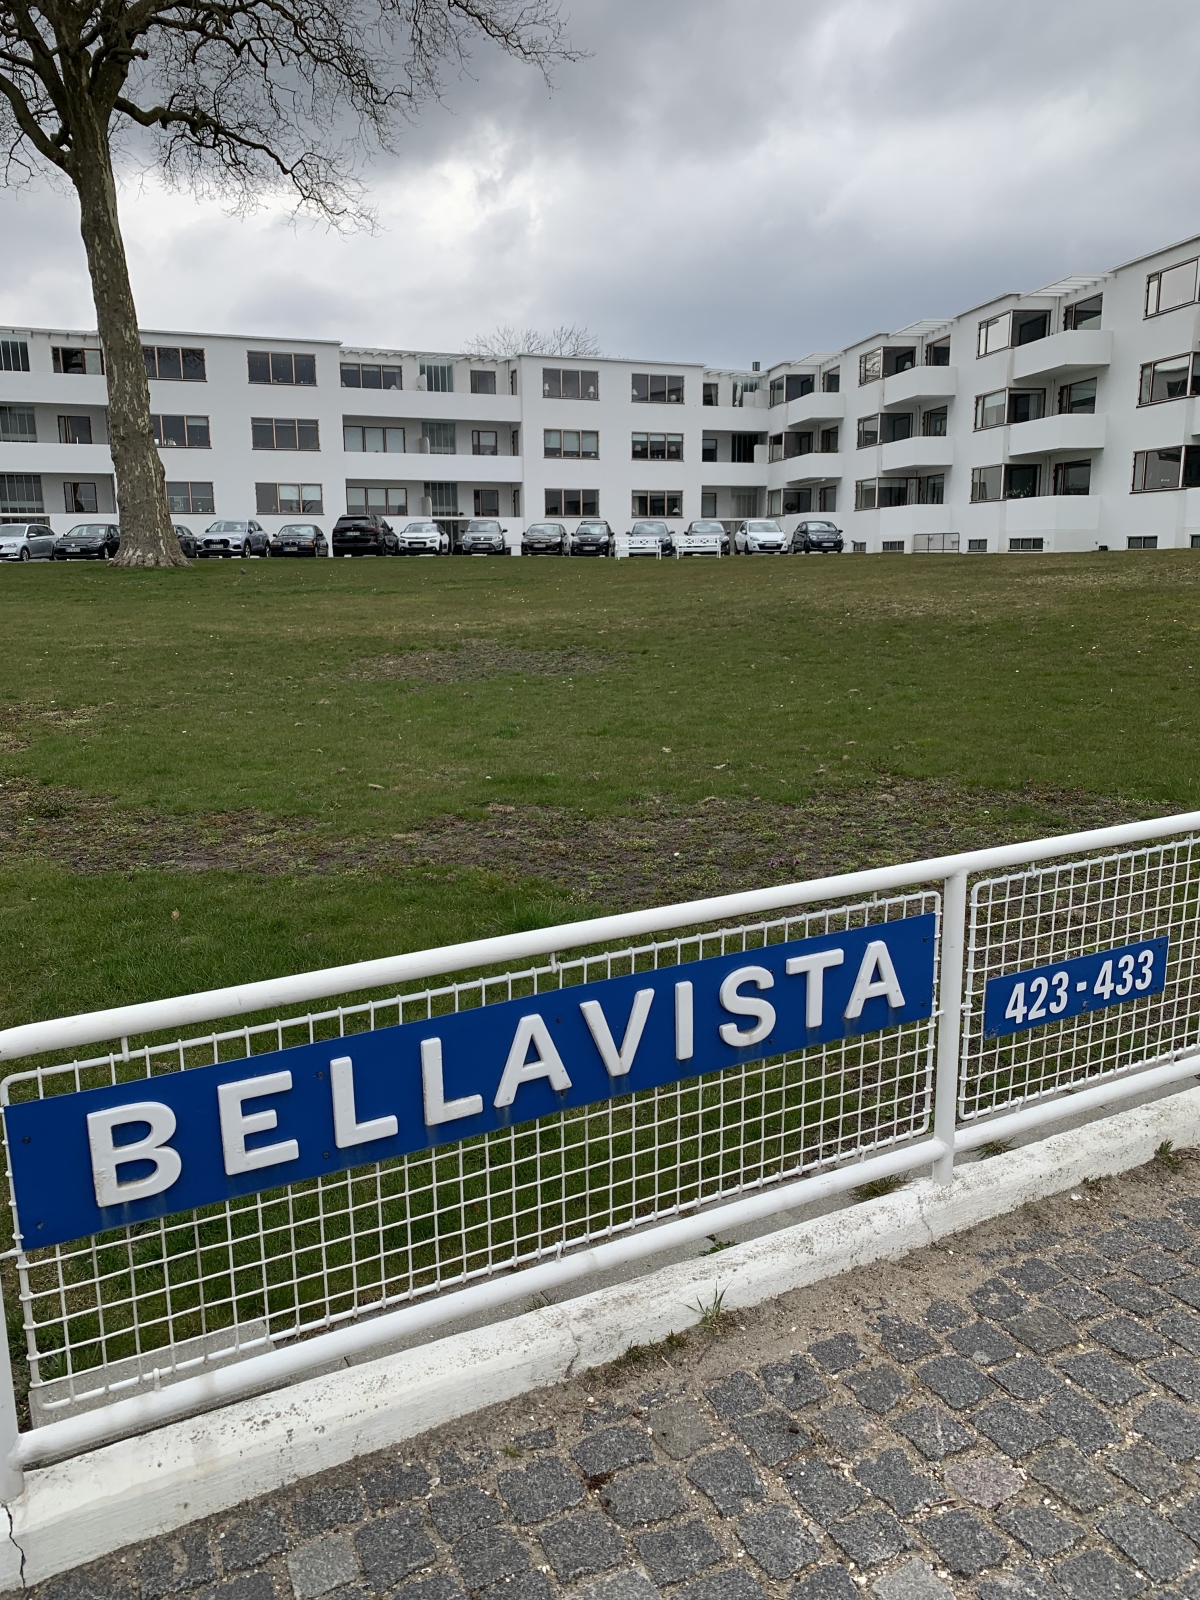 Bellavista housing estate